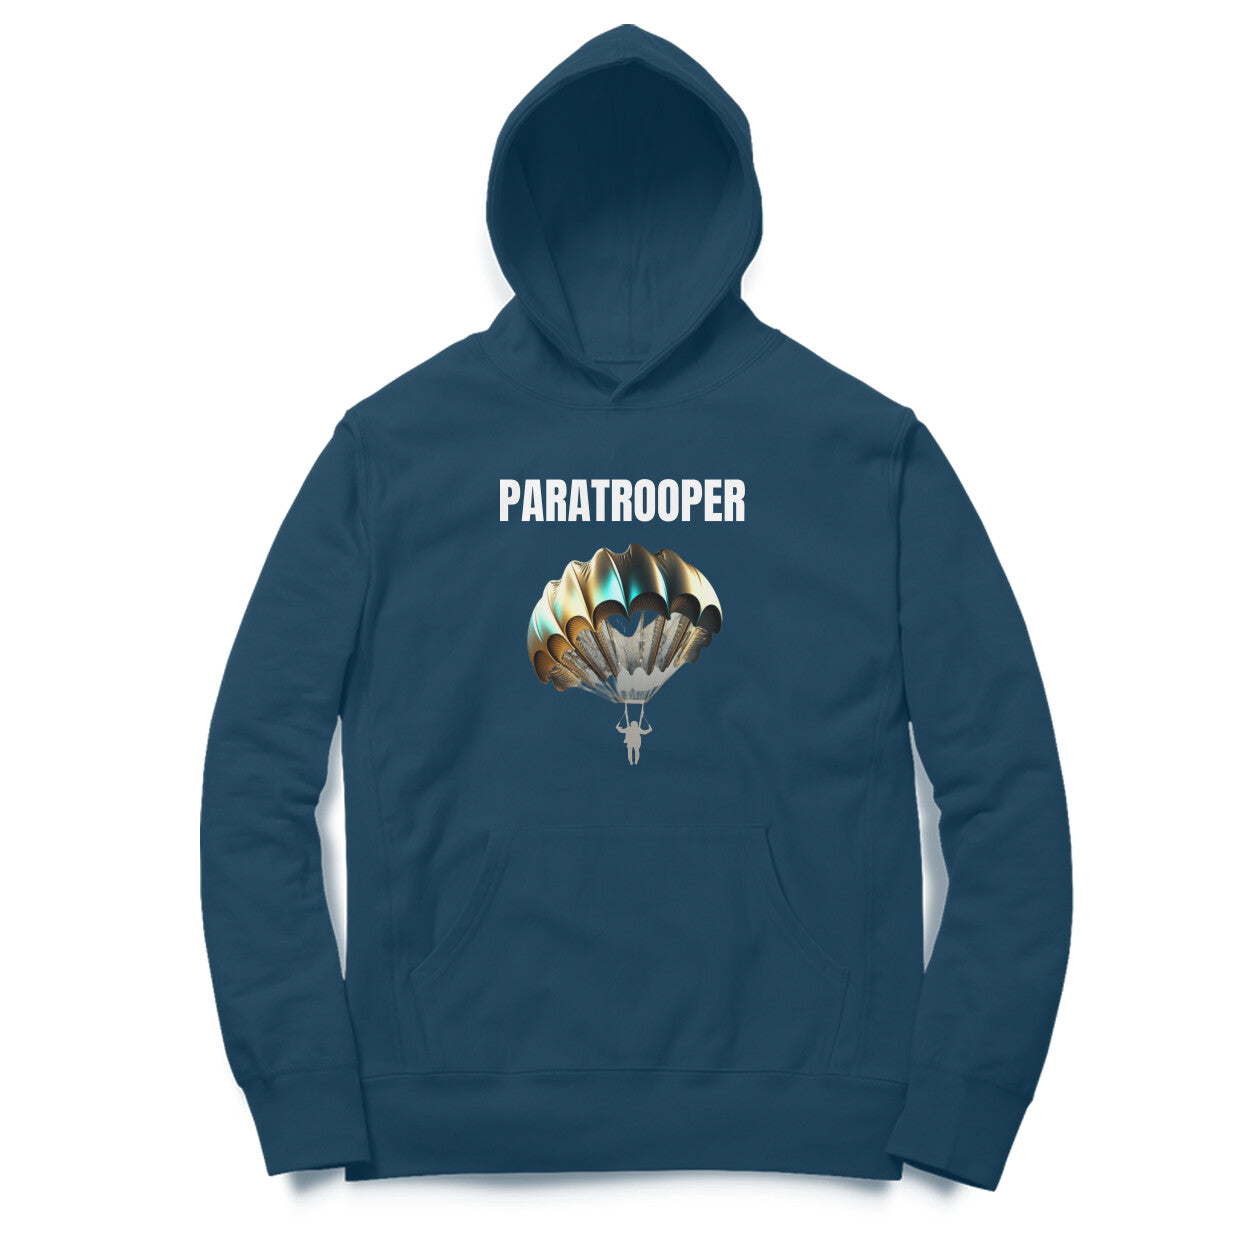 Paratrooper hoodie-light color font